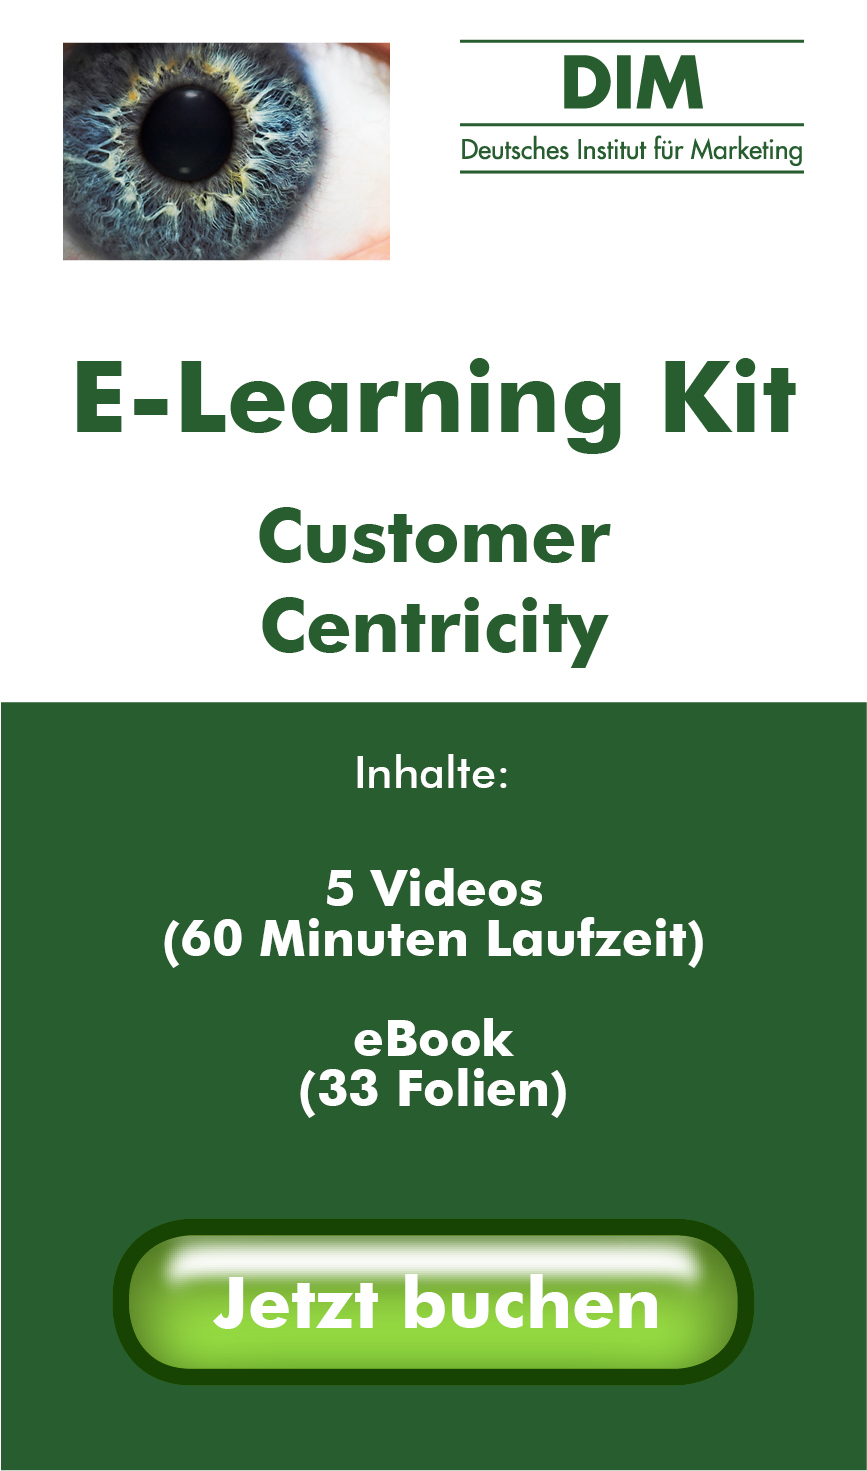 E-Learning Kit "Customer Centricity"